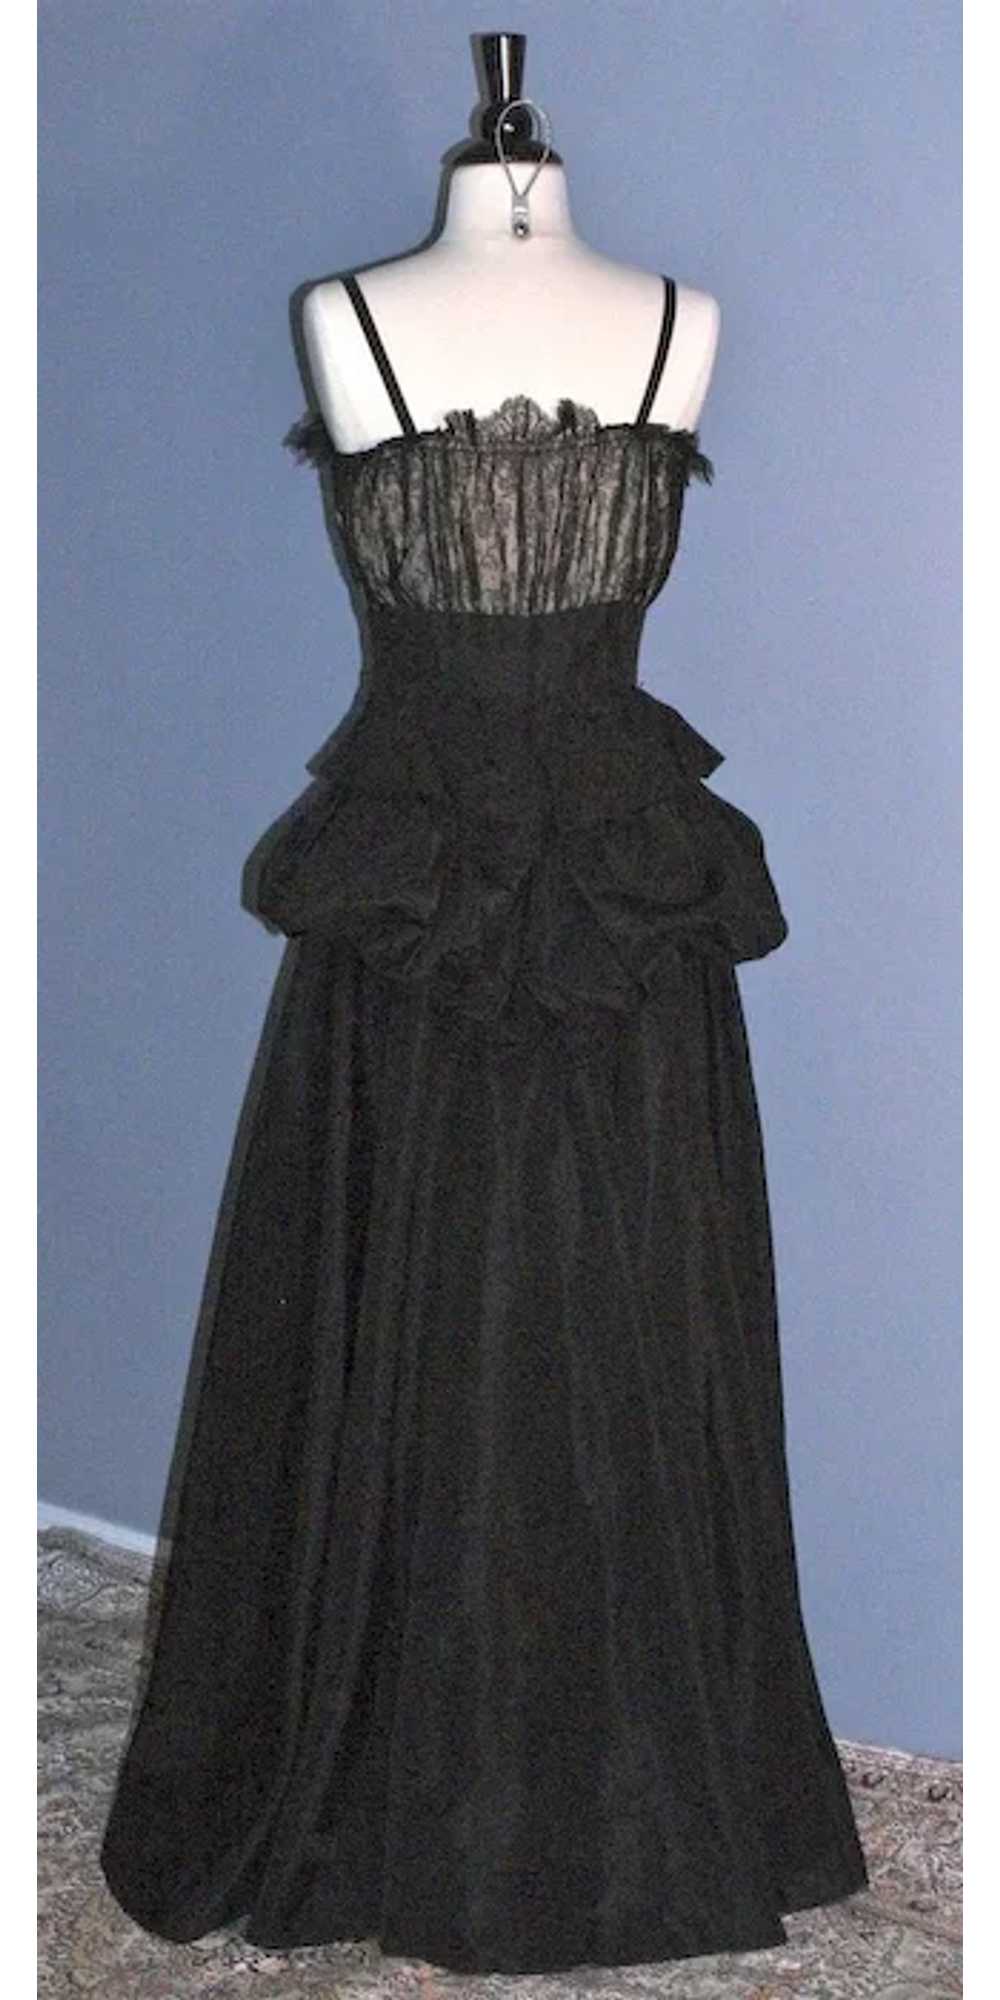 EISENBERG ORIGINAL 1930s Elegant Gown/Dress - Bla… - image 6